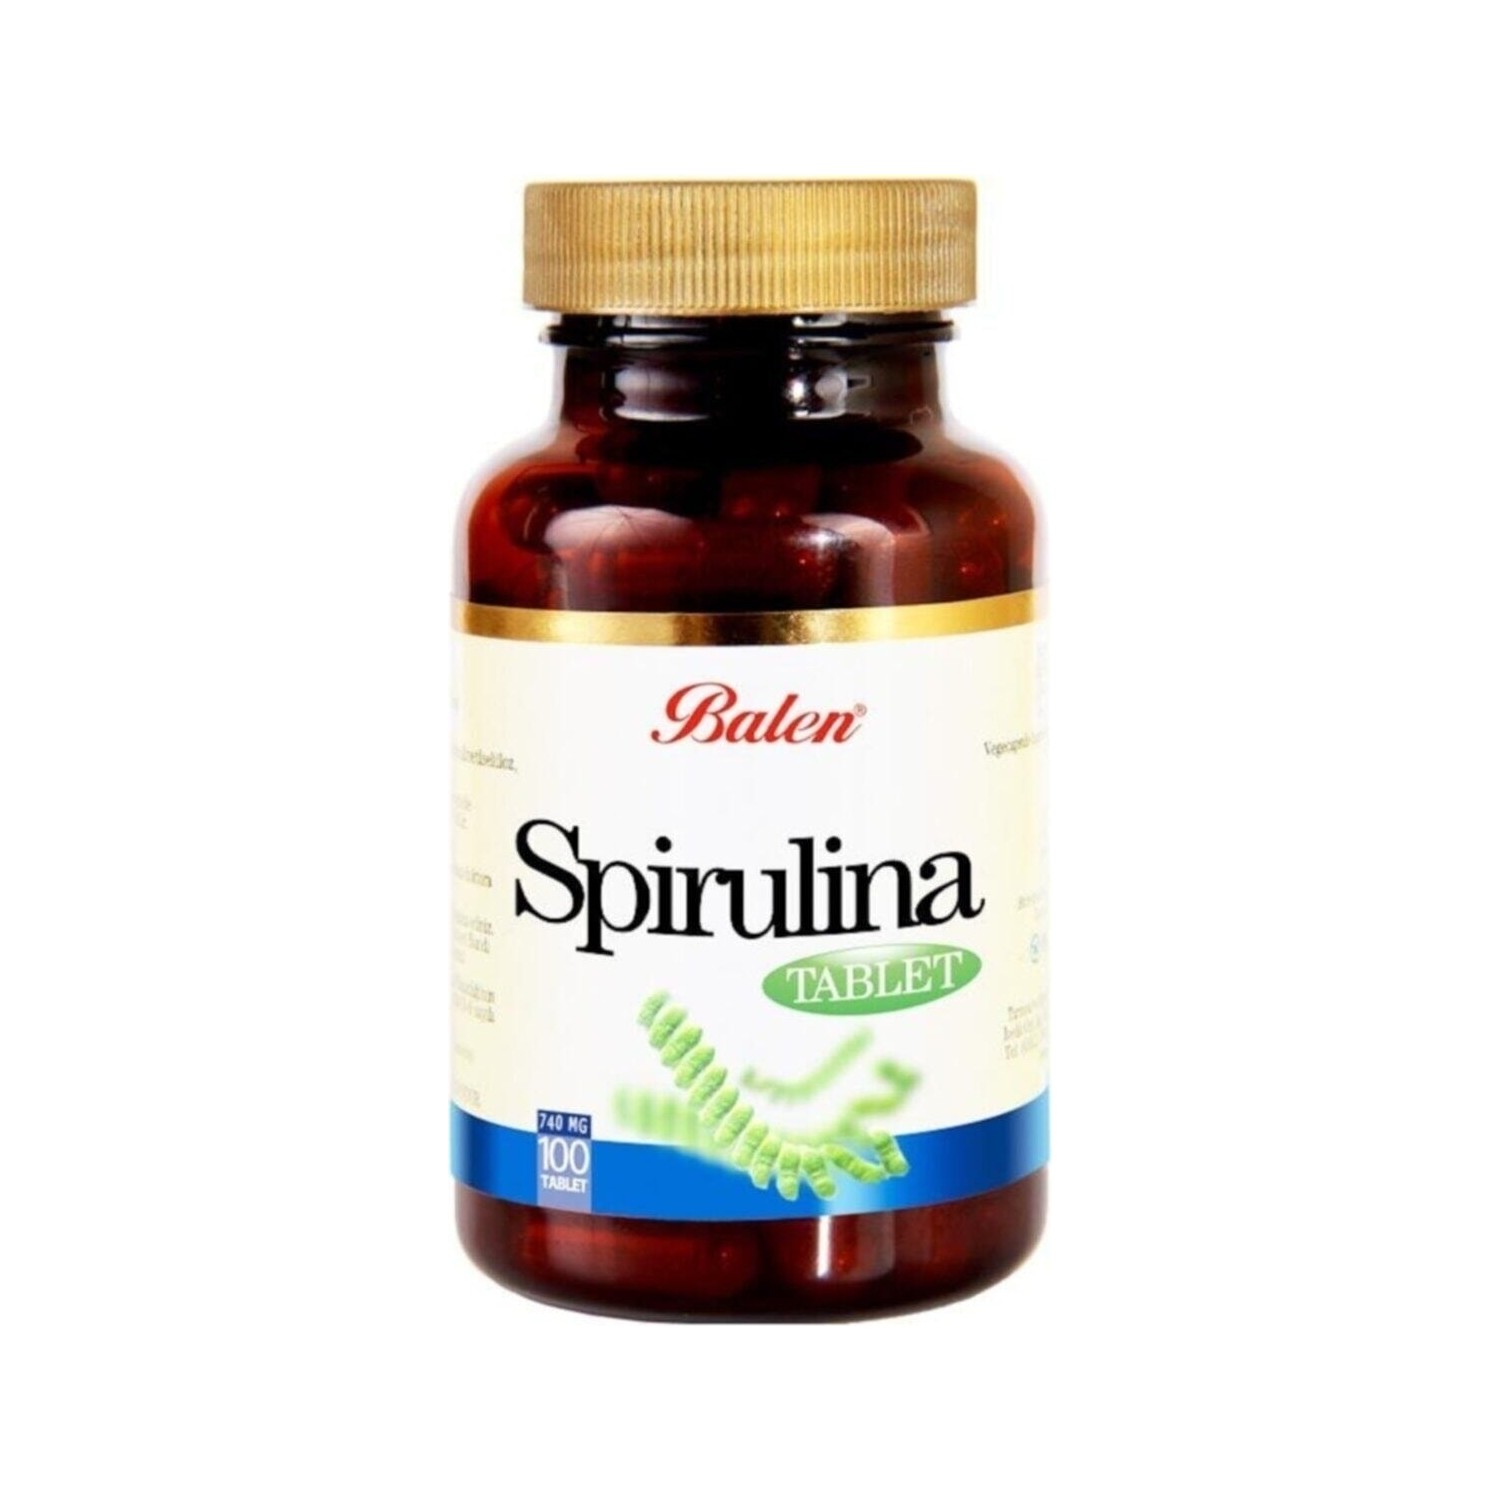 цена Пищевая добавка Balen Spirulina 740 мг, 100 таблеток